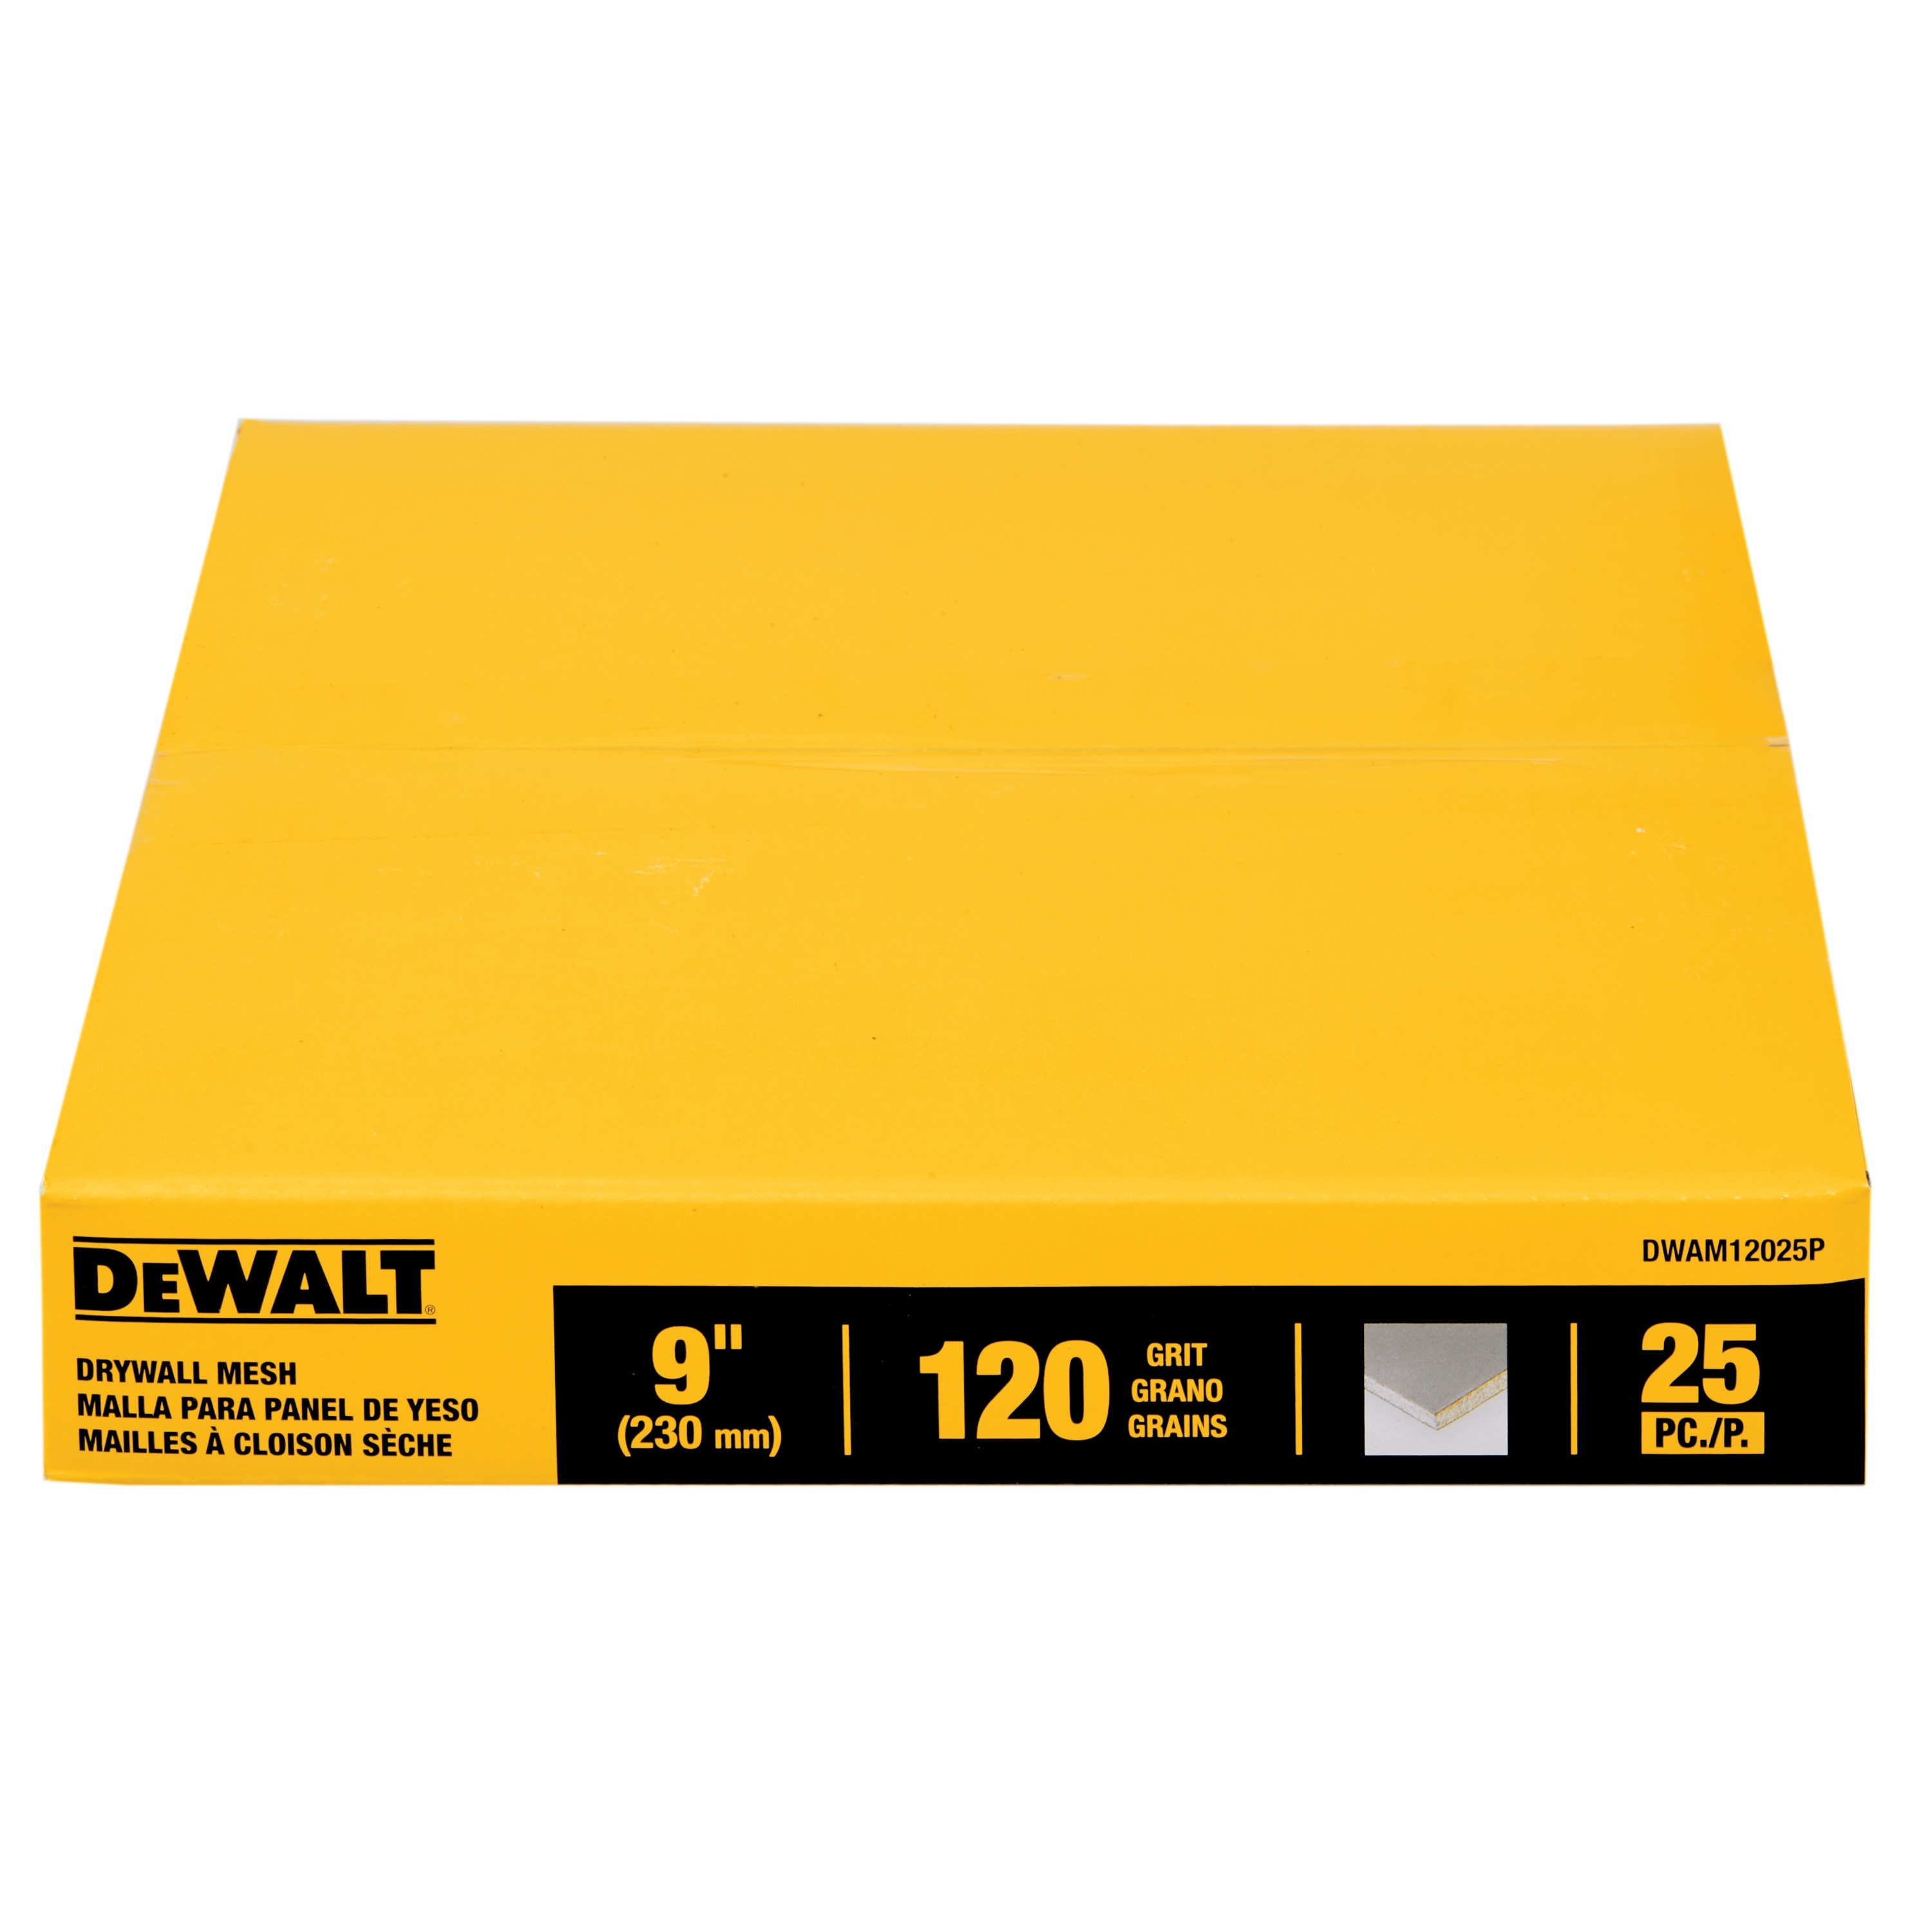 DEWALT - 9 in Drywall Mesh - DWAM12025P